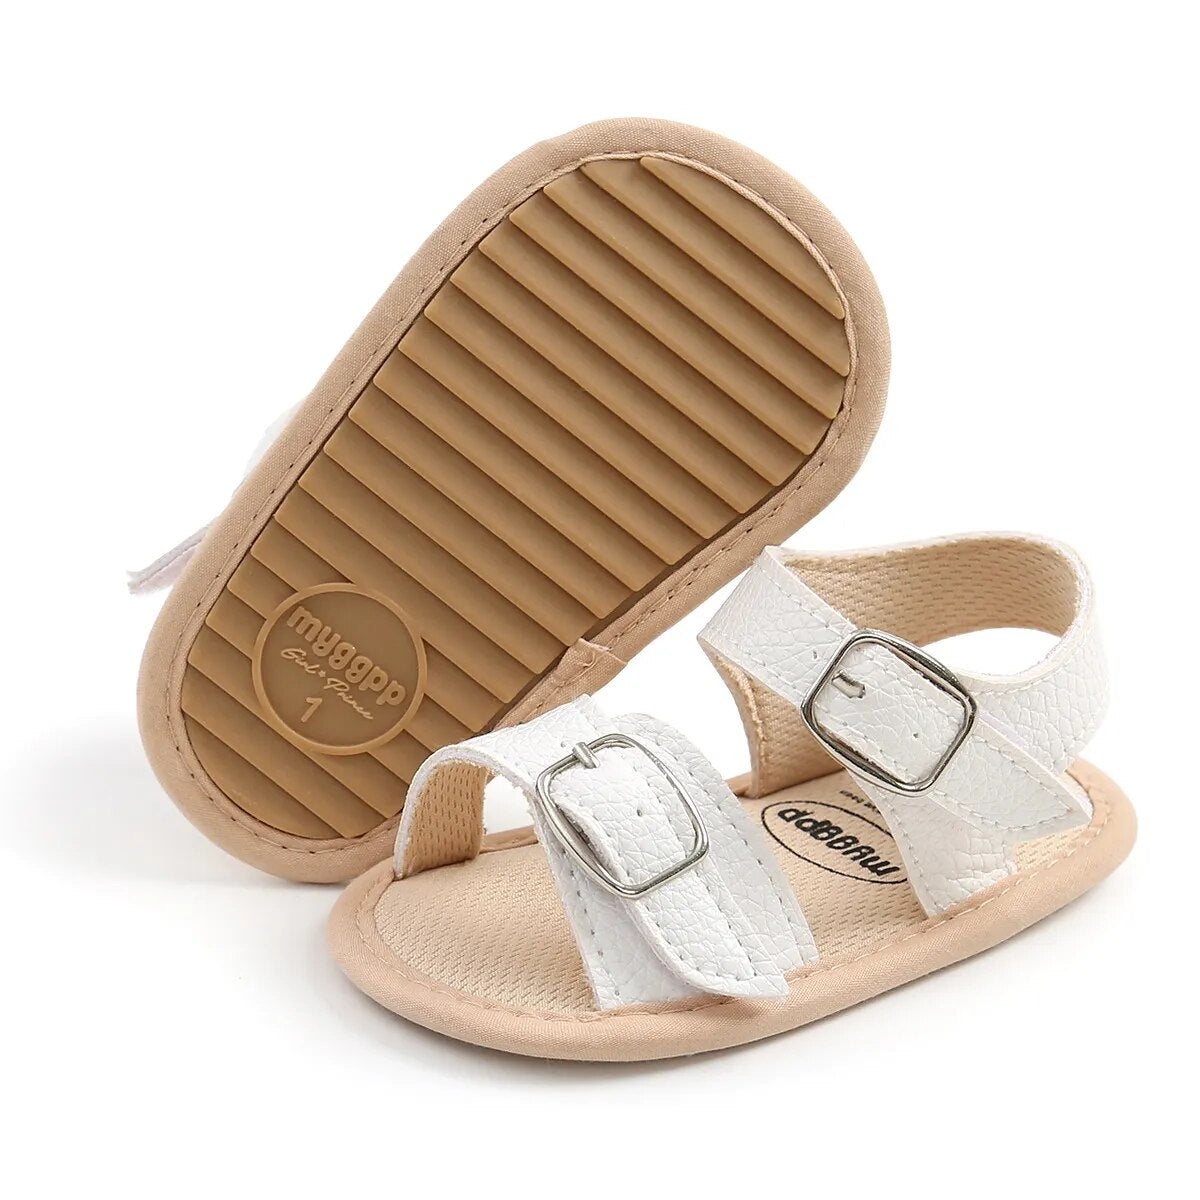 New Infant Baby Girl Shoes Toddler Flats Summer Sandal Flower Soft Rubber Sole Anti-Slip Crib Shoes - BGSD50784